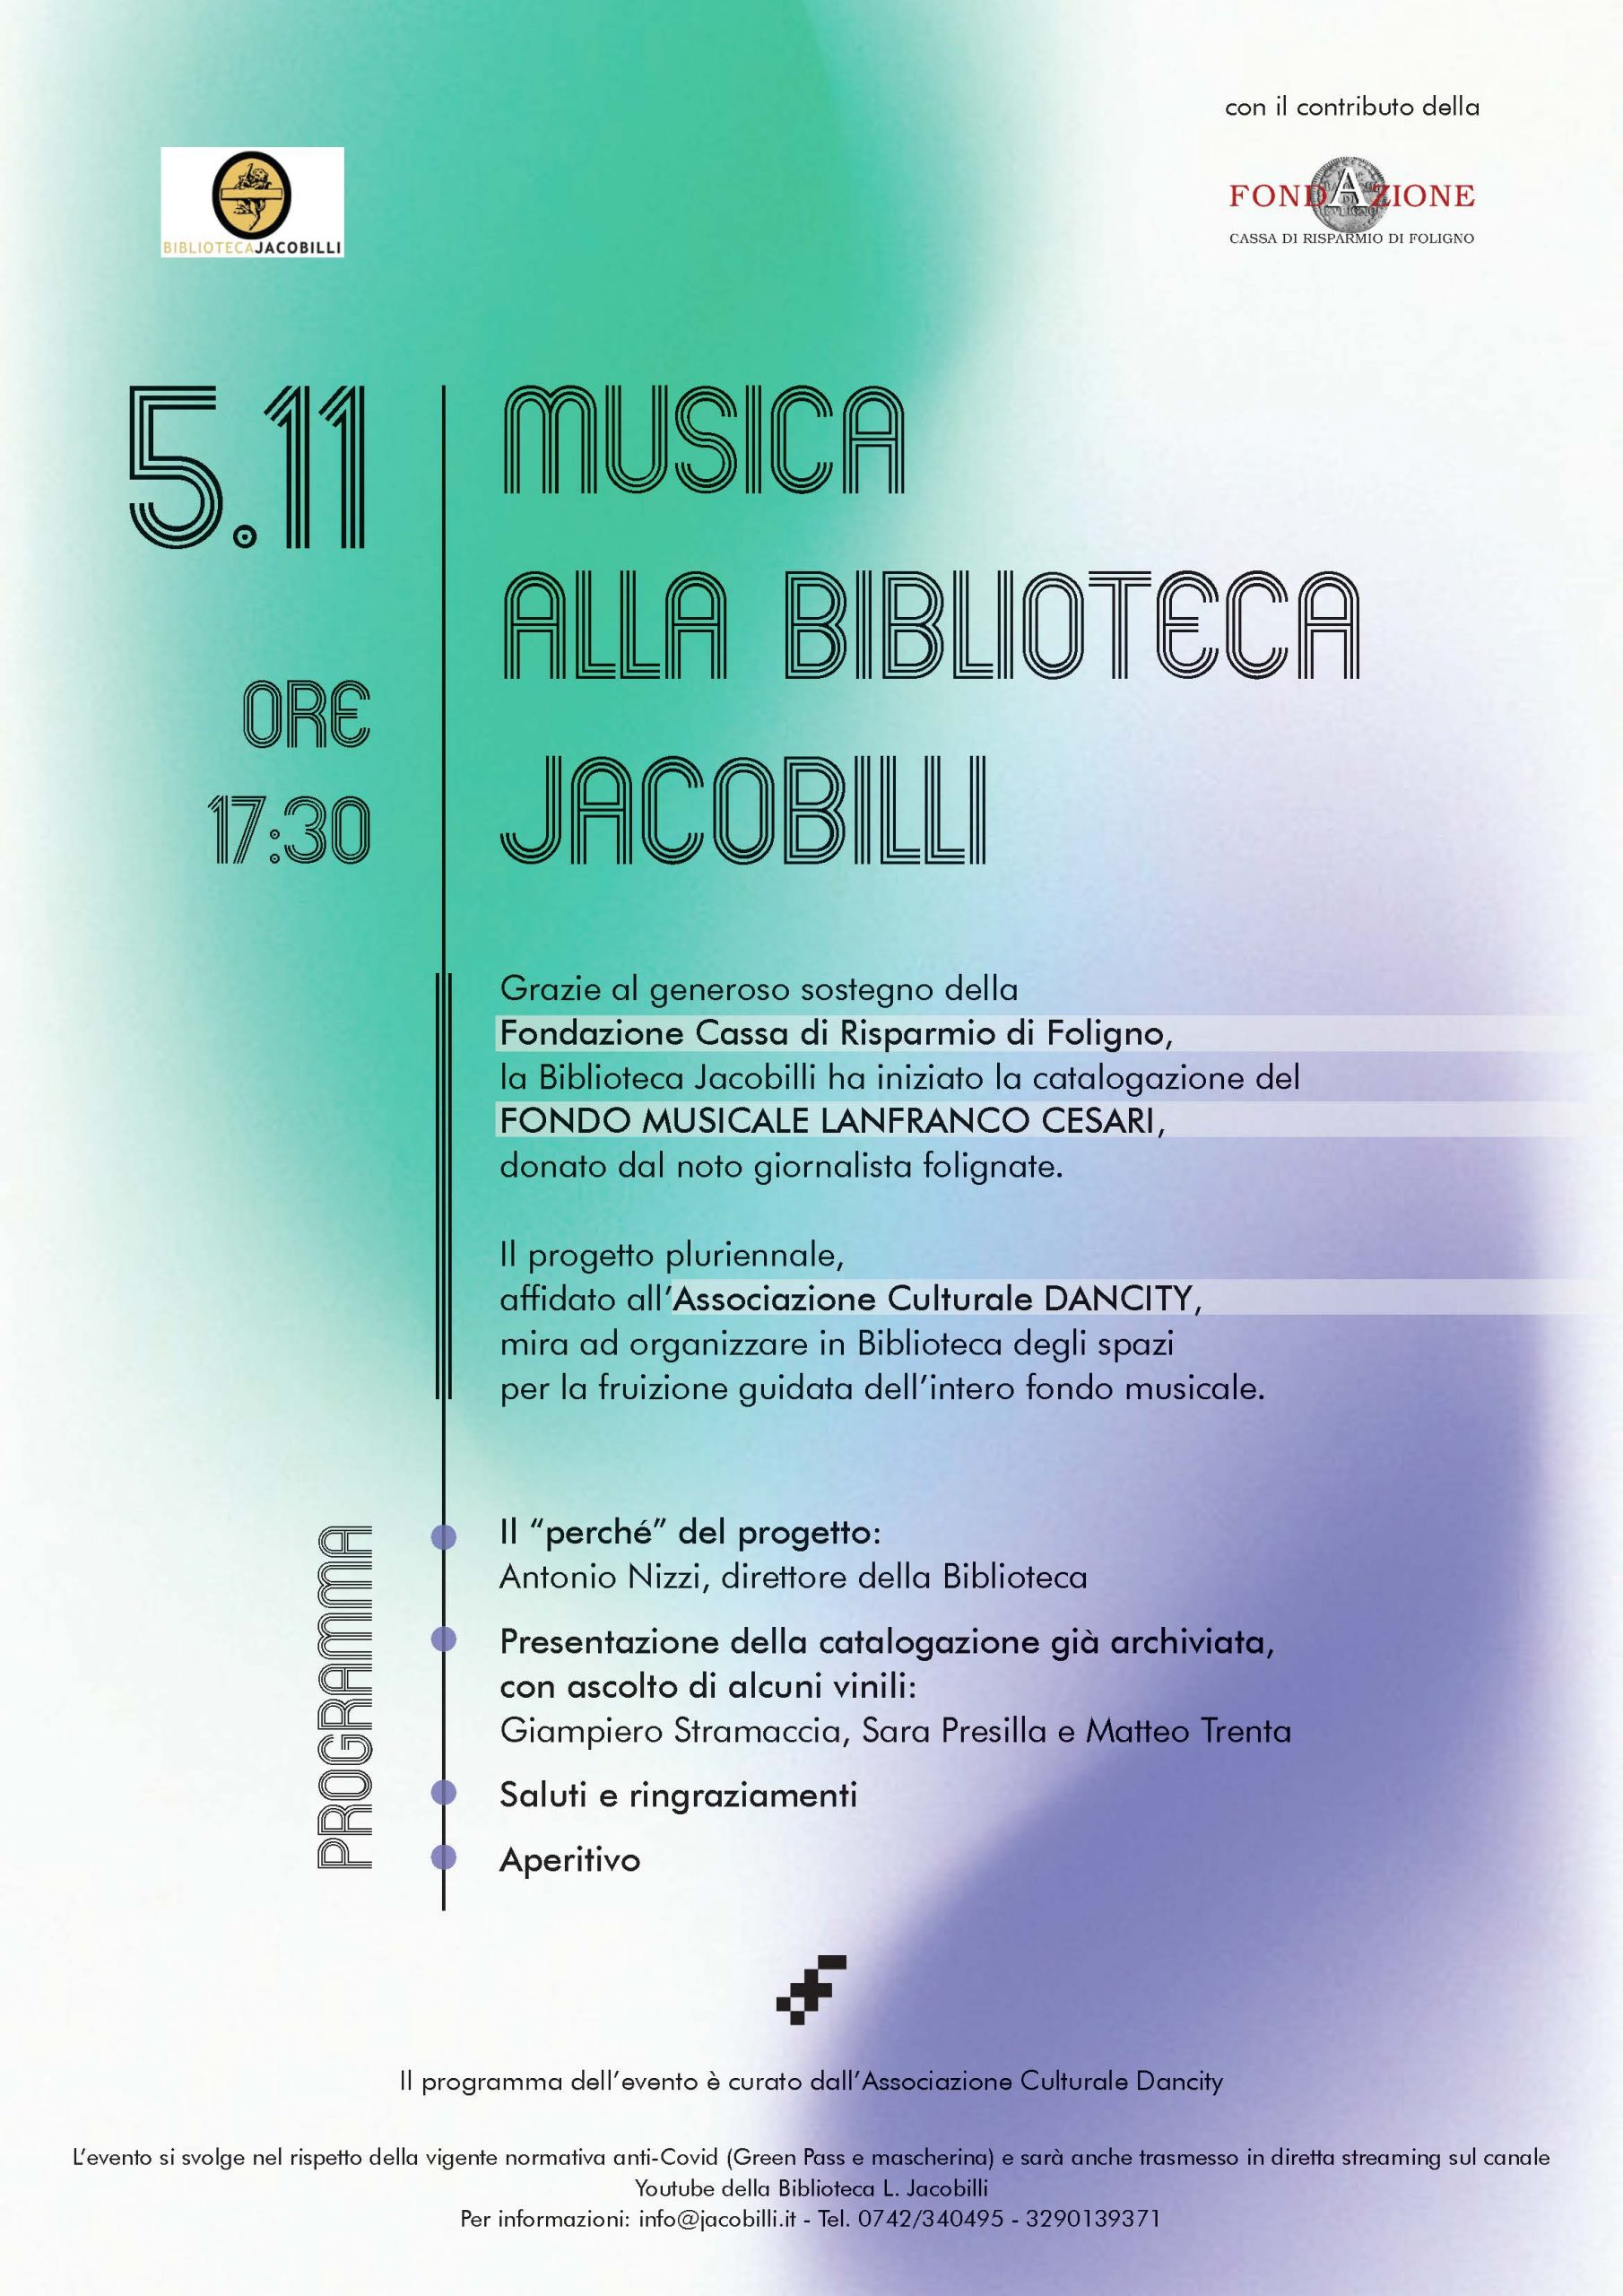 Musica alla Biblioteca Jacobilli